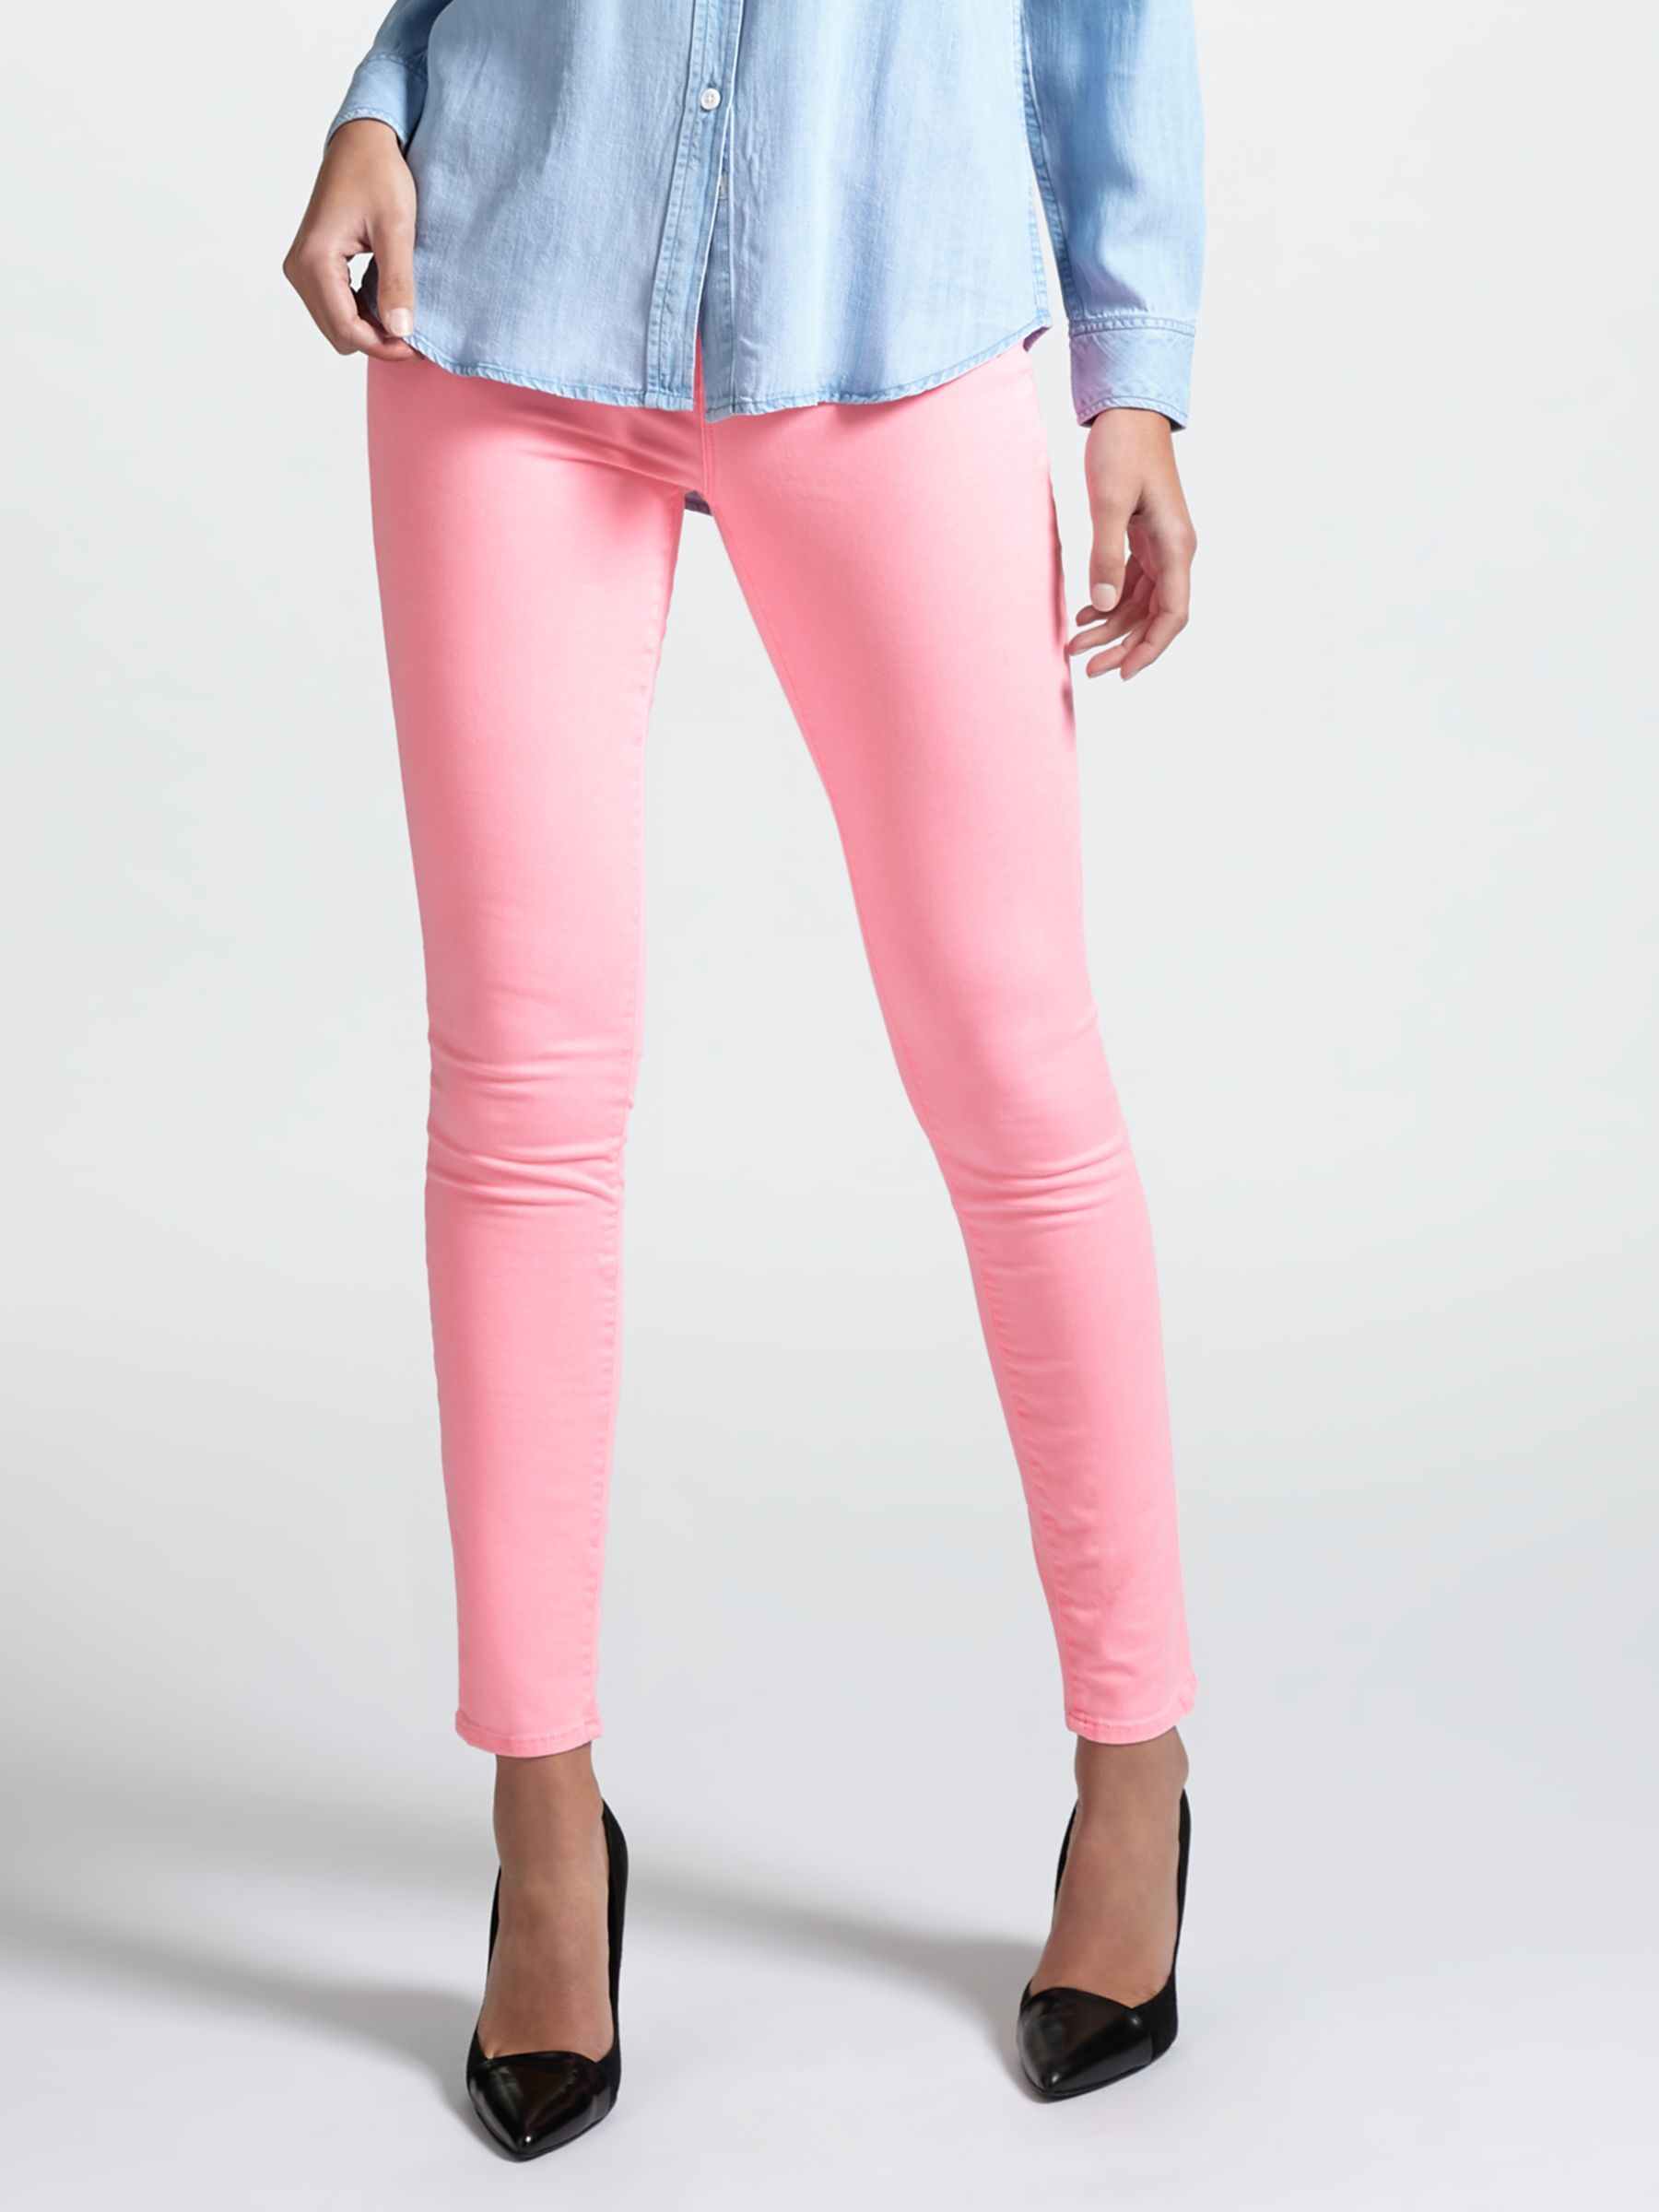 j brand pink jeans